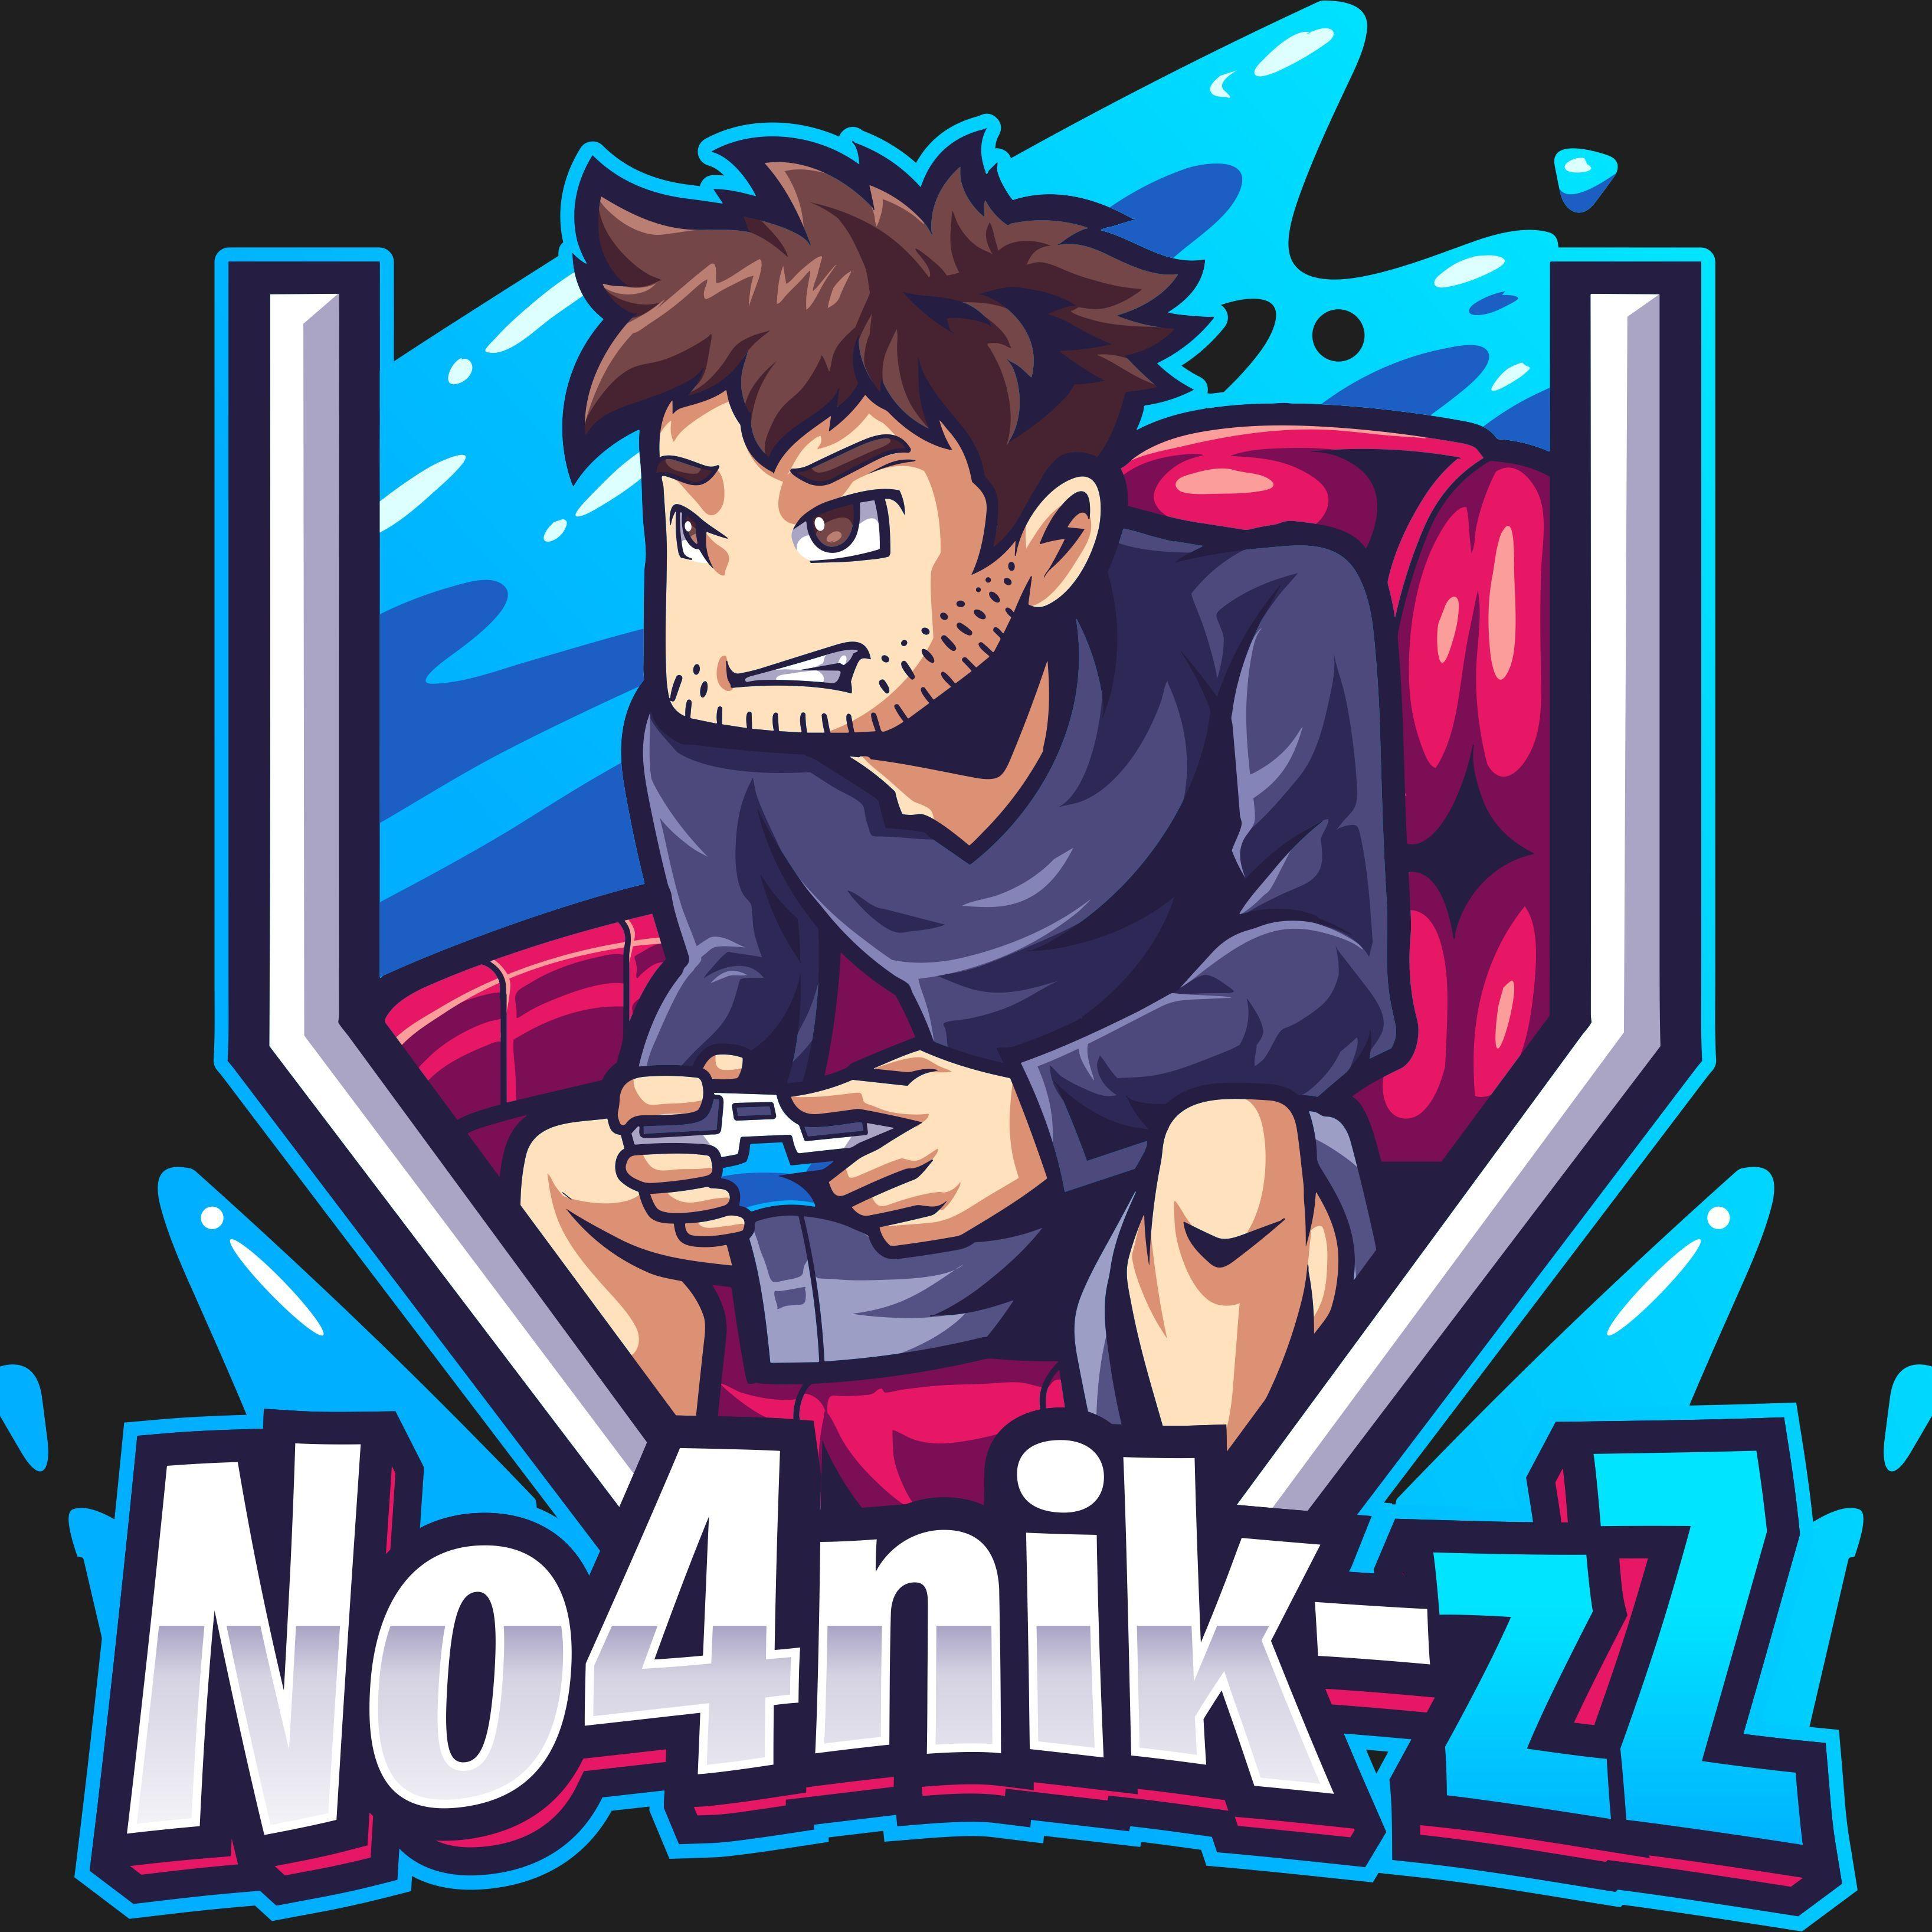 Player No4nik_zZ avatar